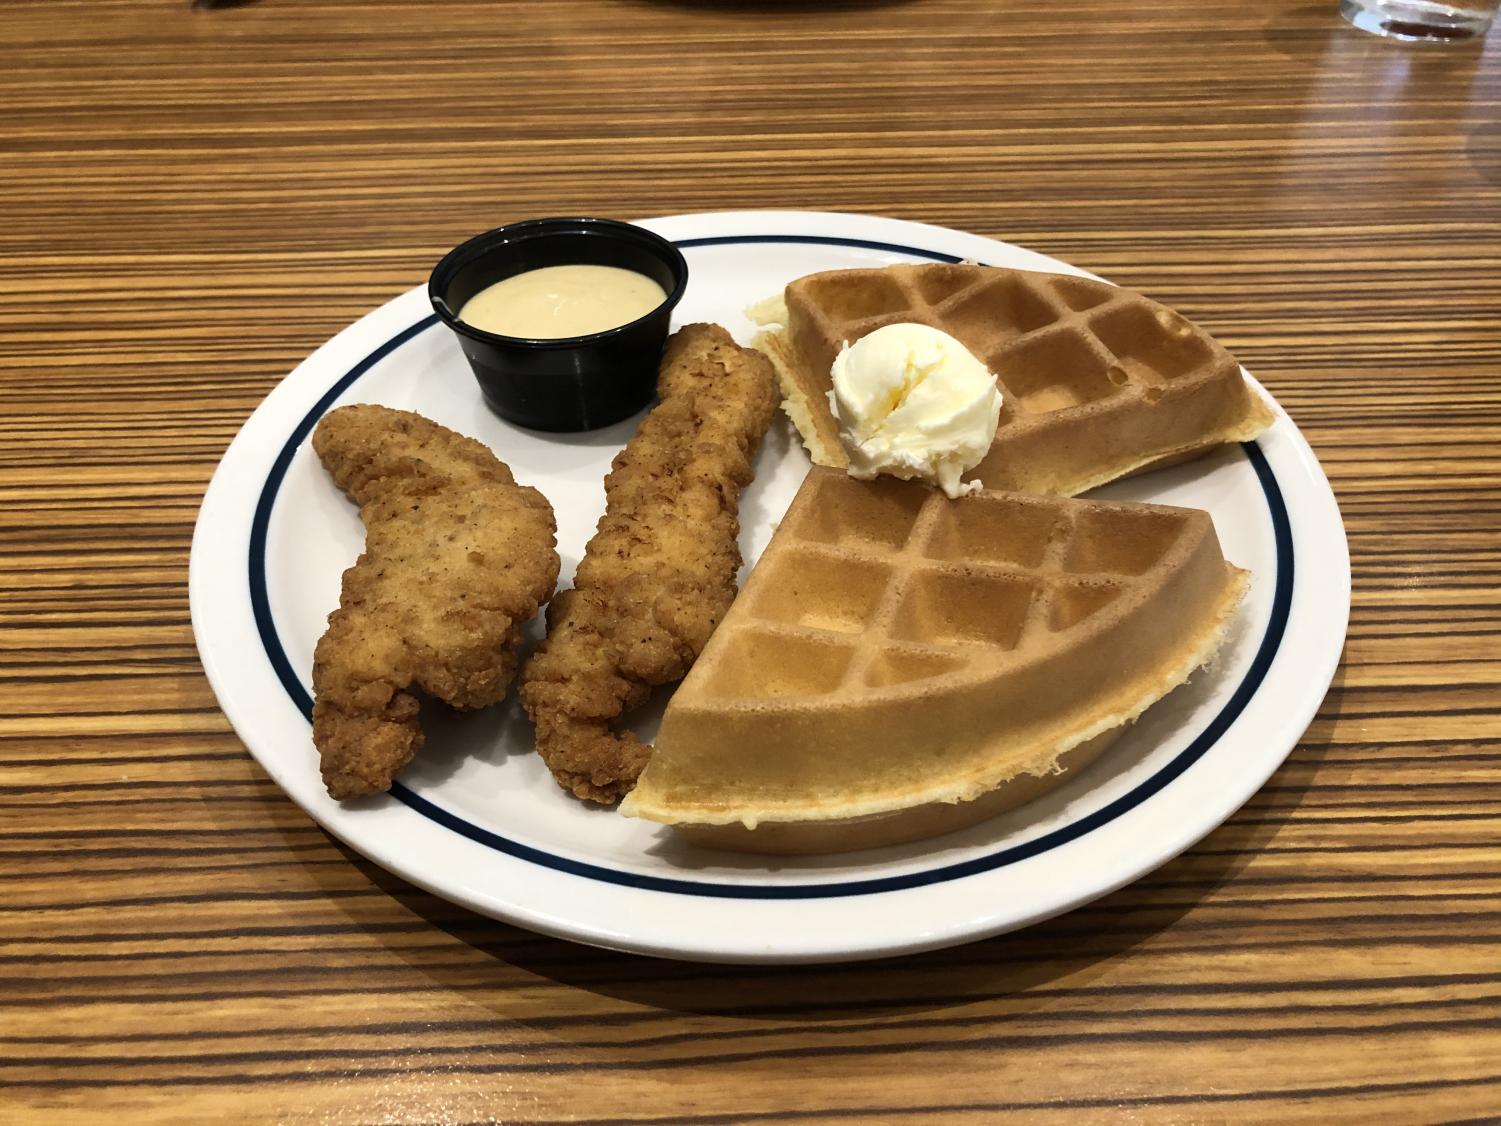 Food Review: IHOP Waffles – Granite Bay Today